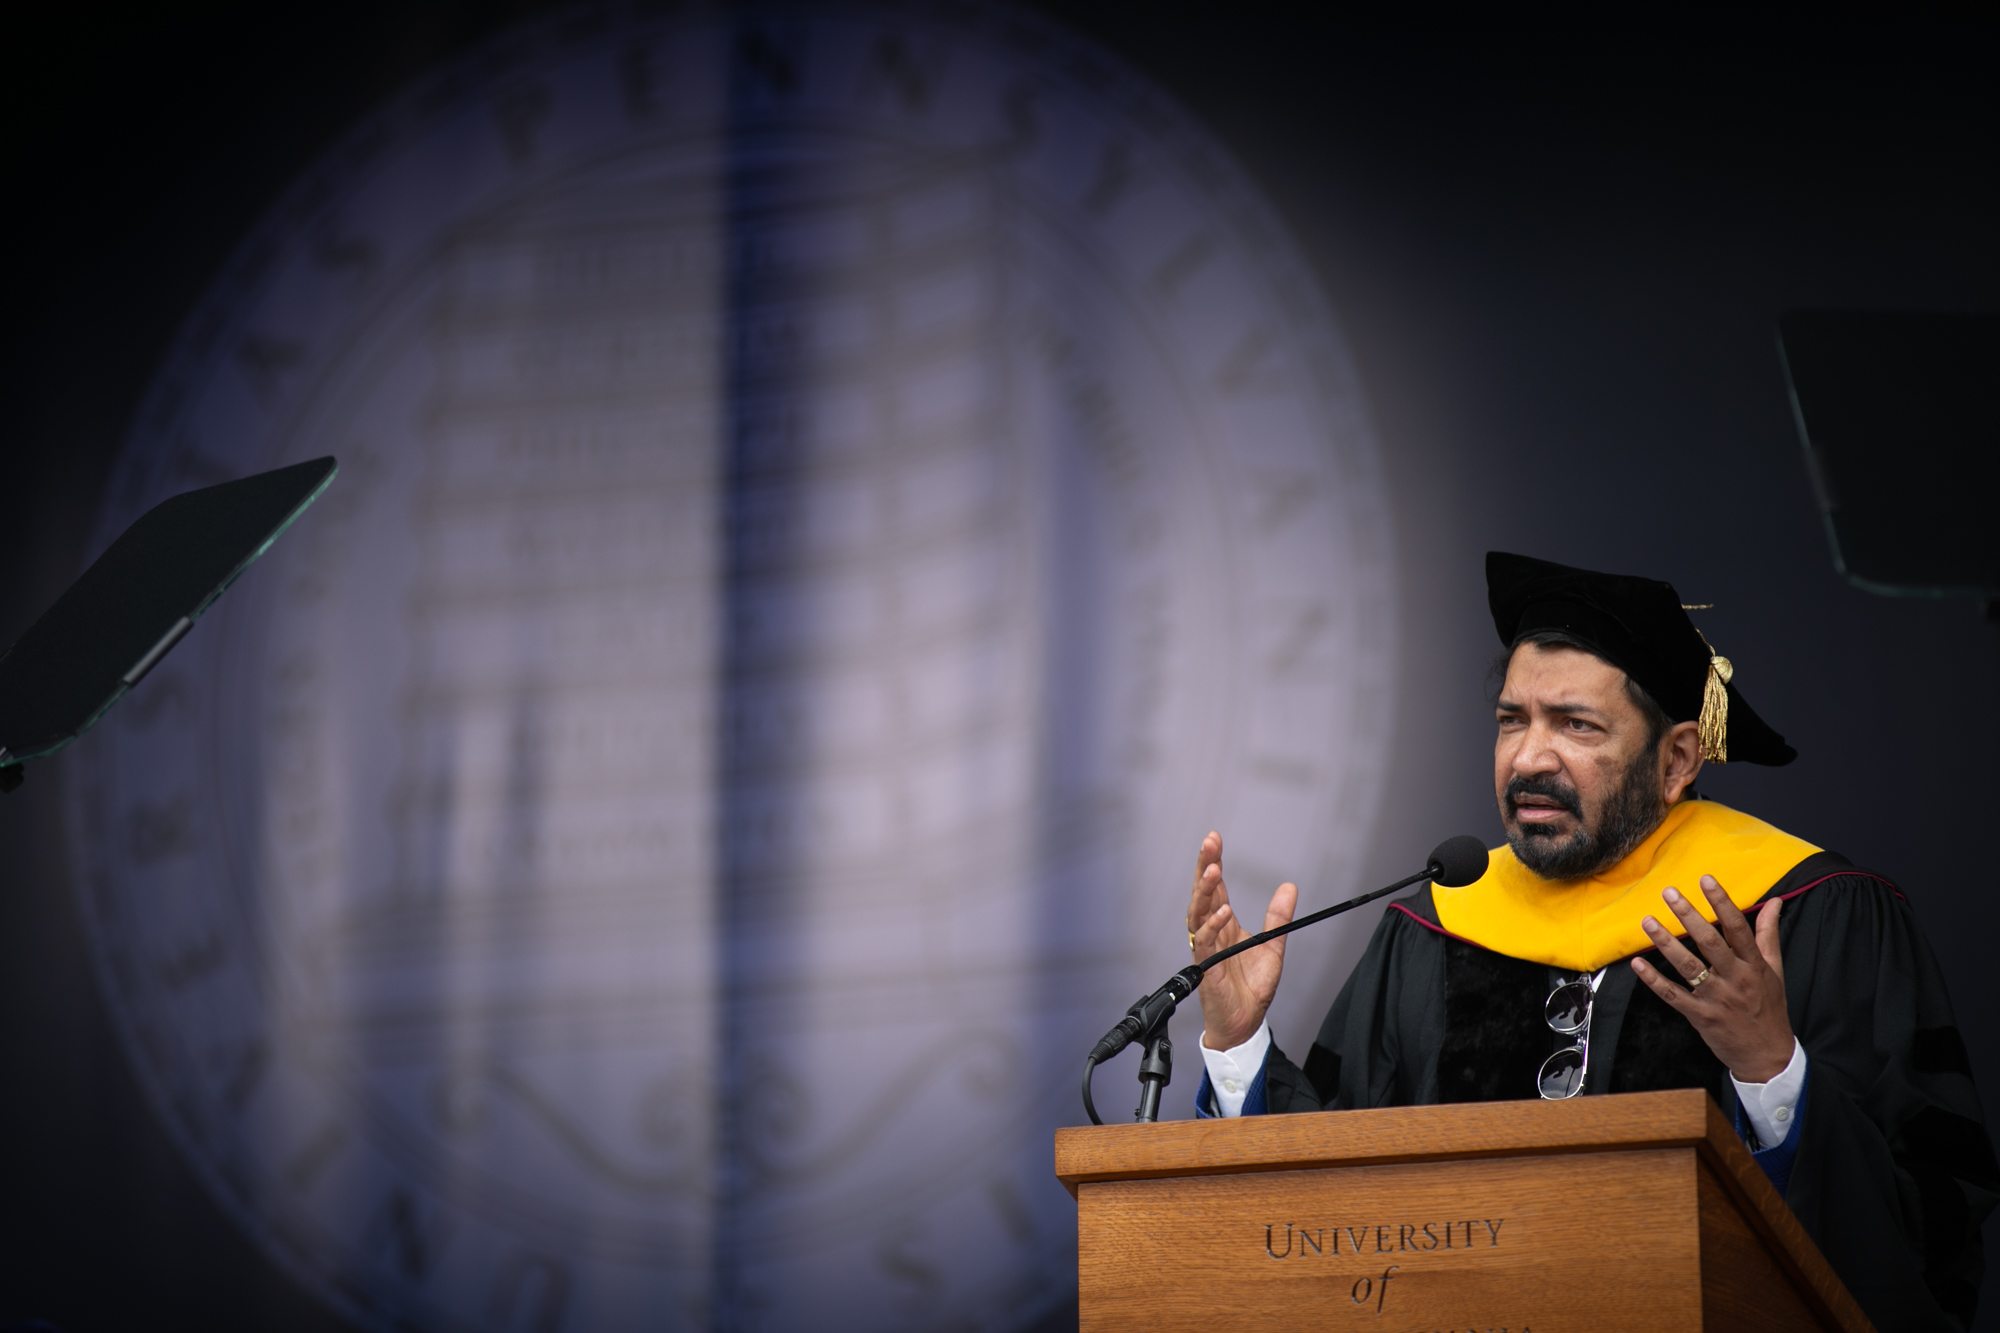 Siddhartha Mukherjee presents his commencement speech to graduates